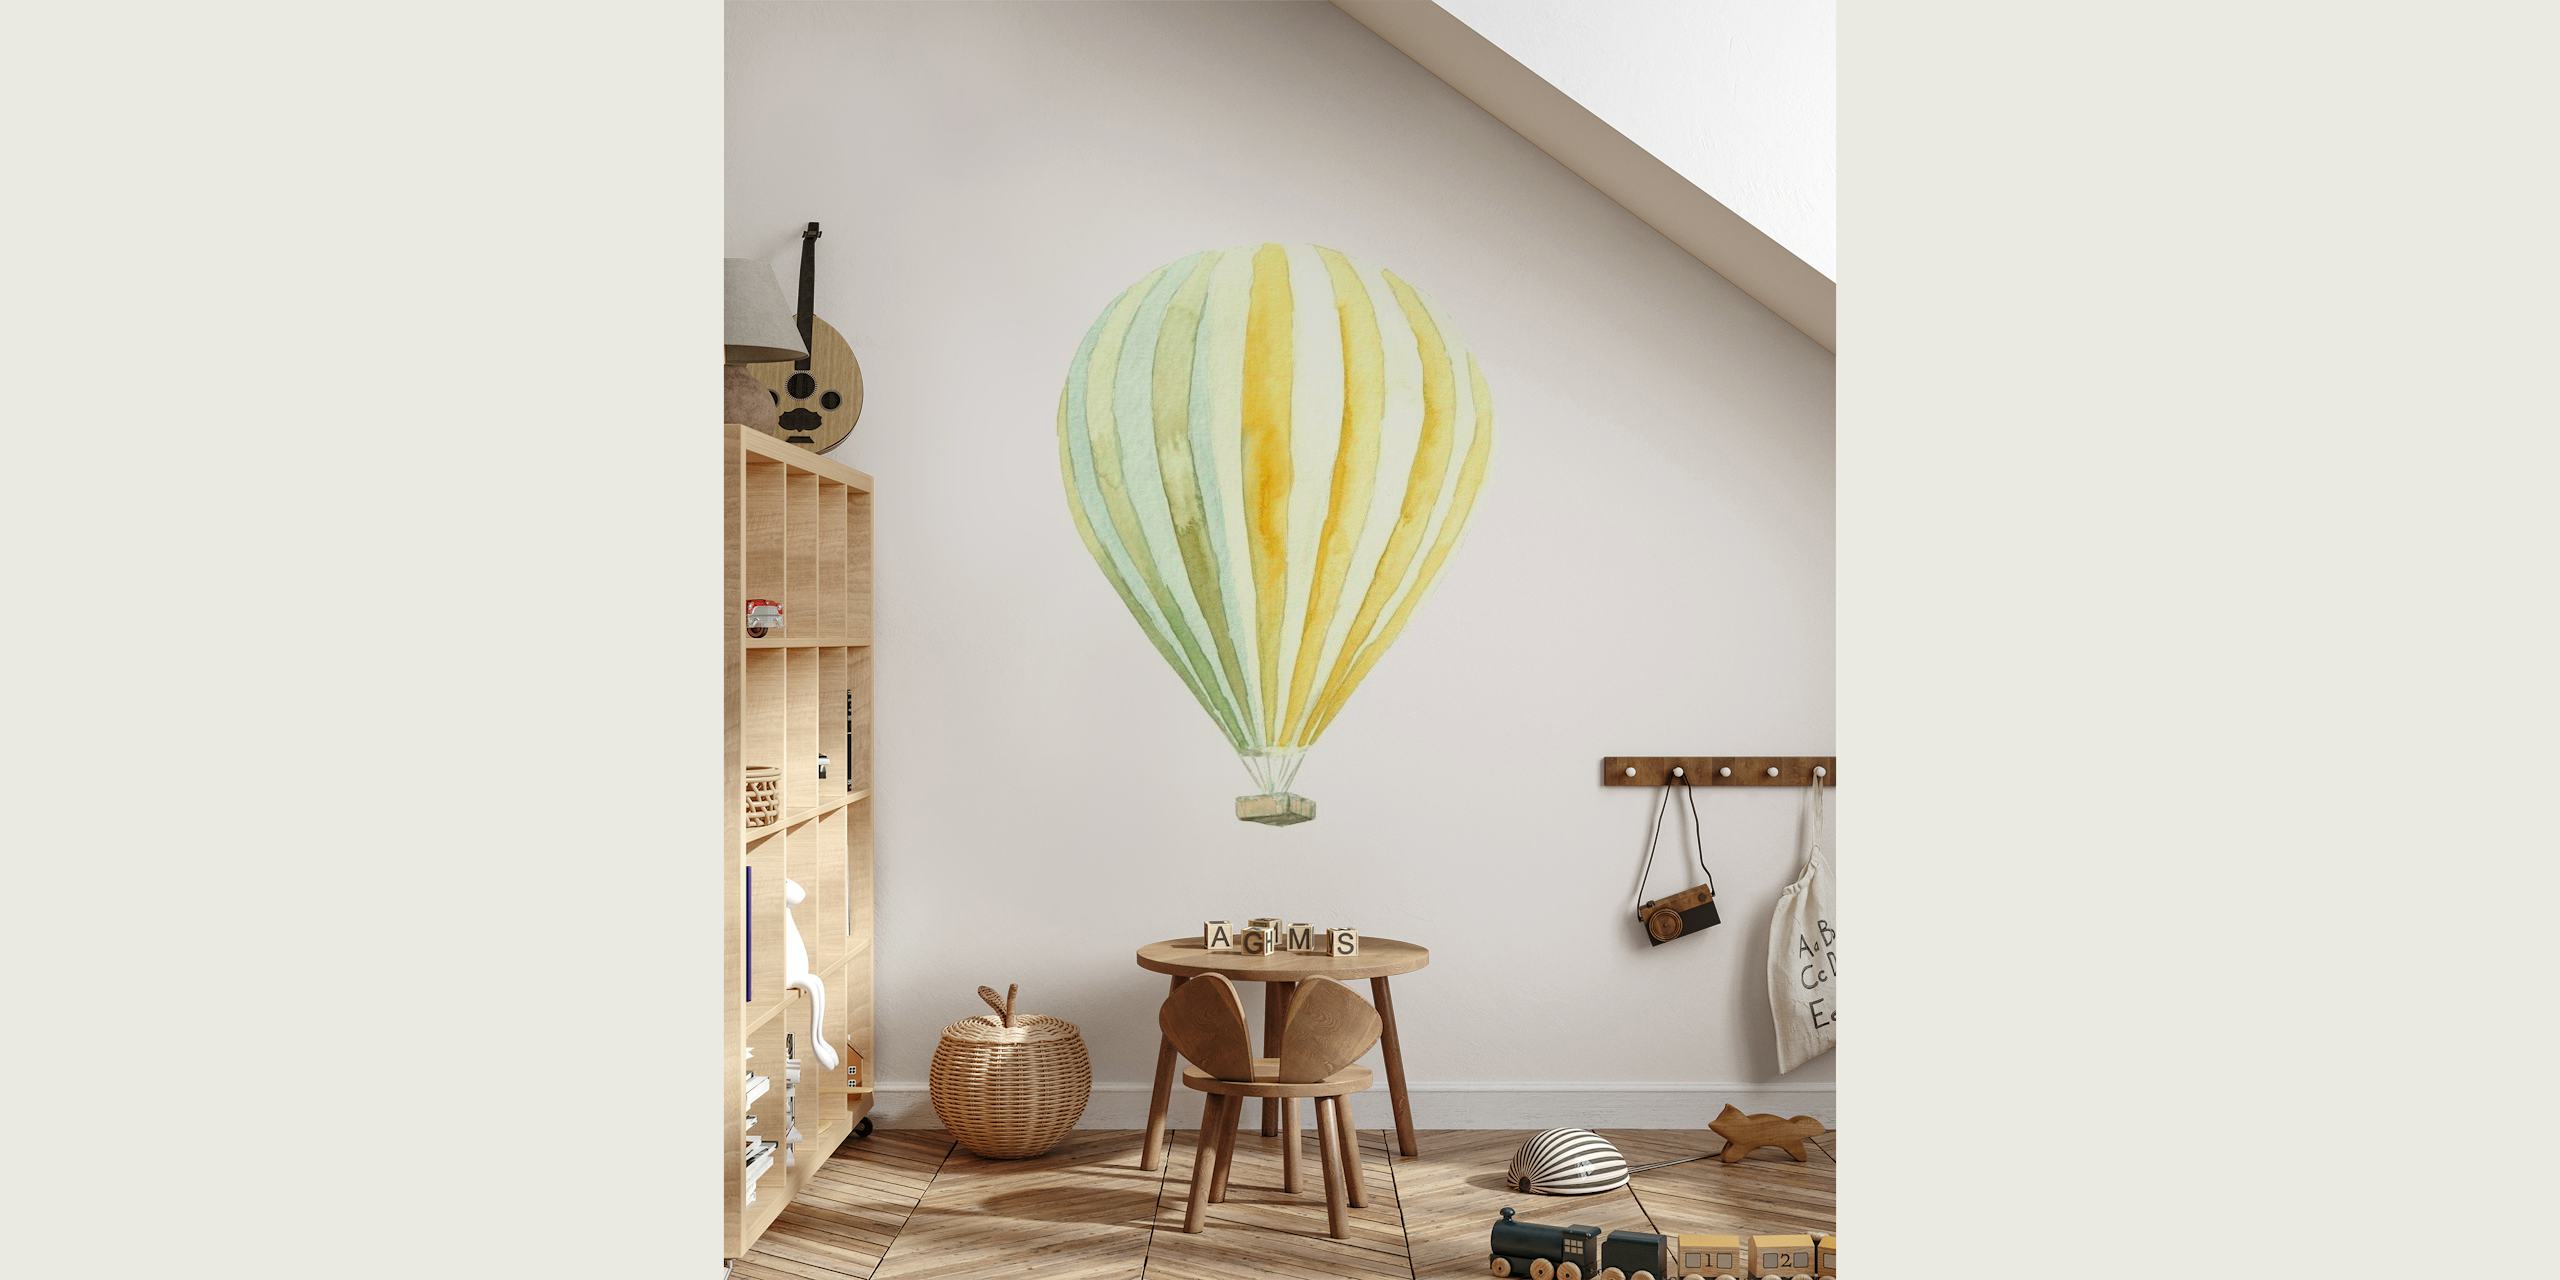 Nursery Room // Balloon wallpaper